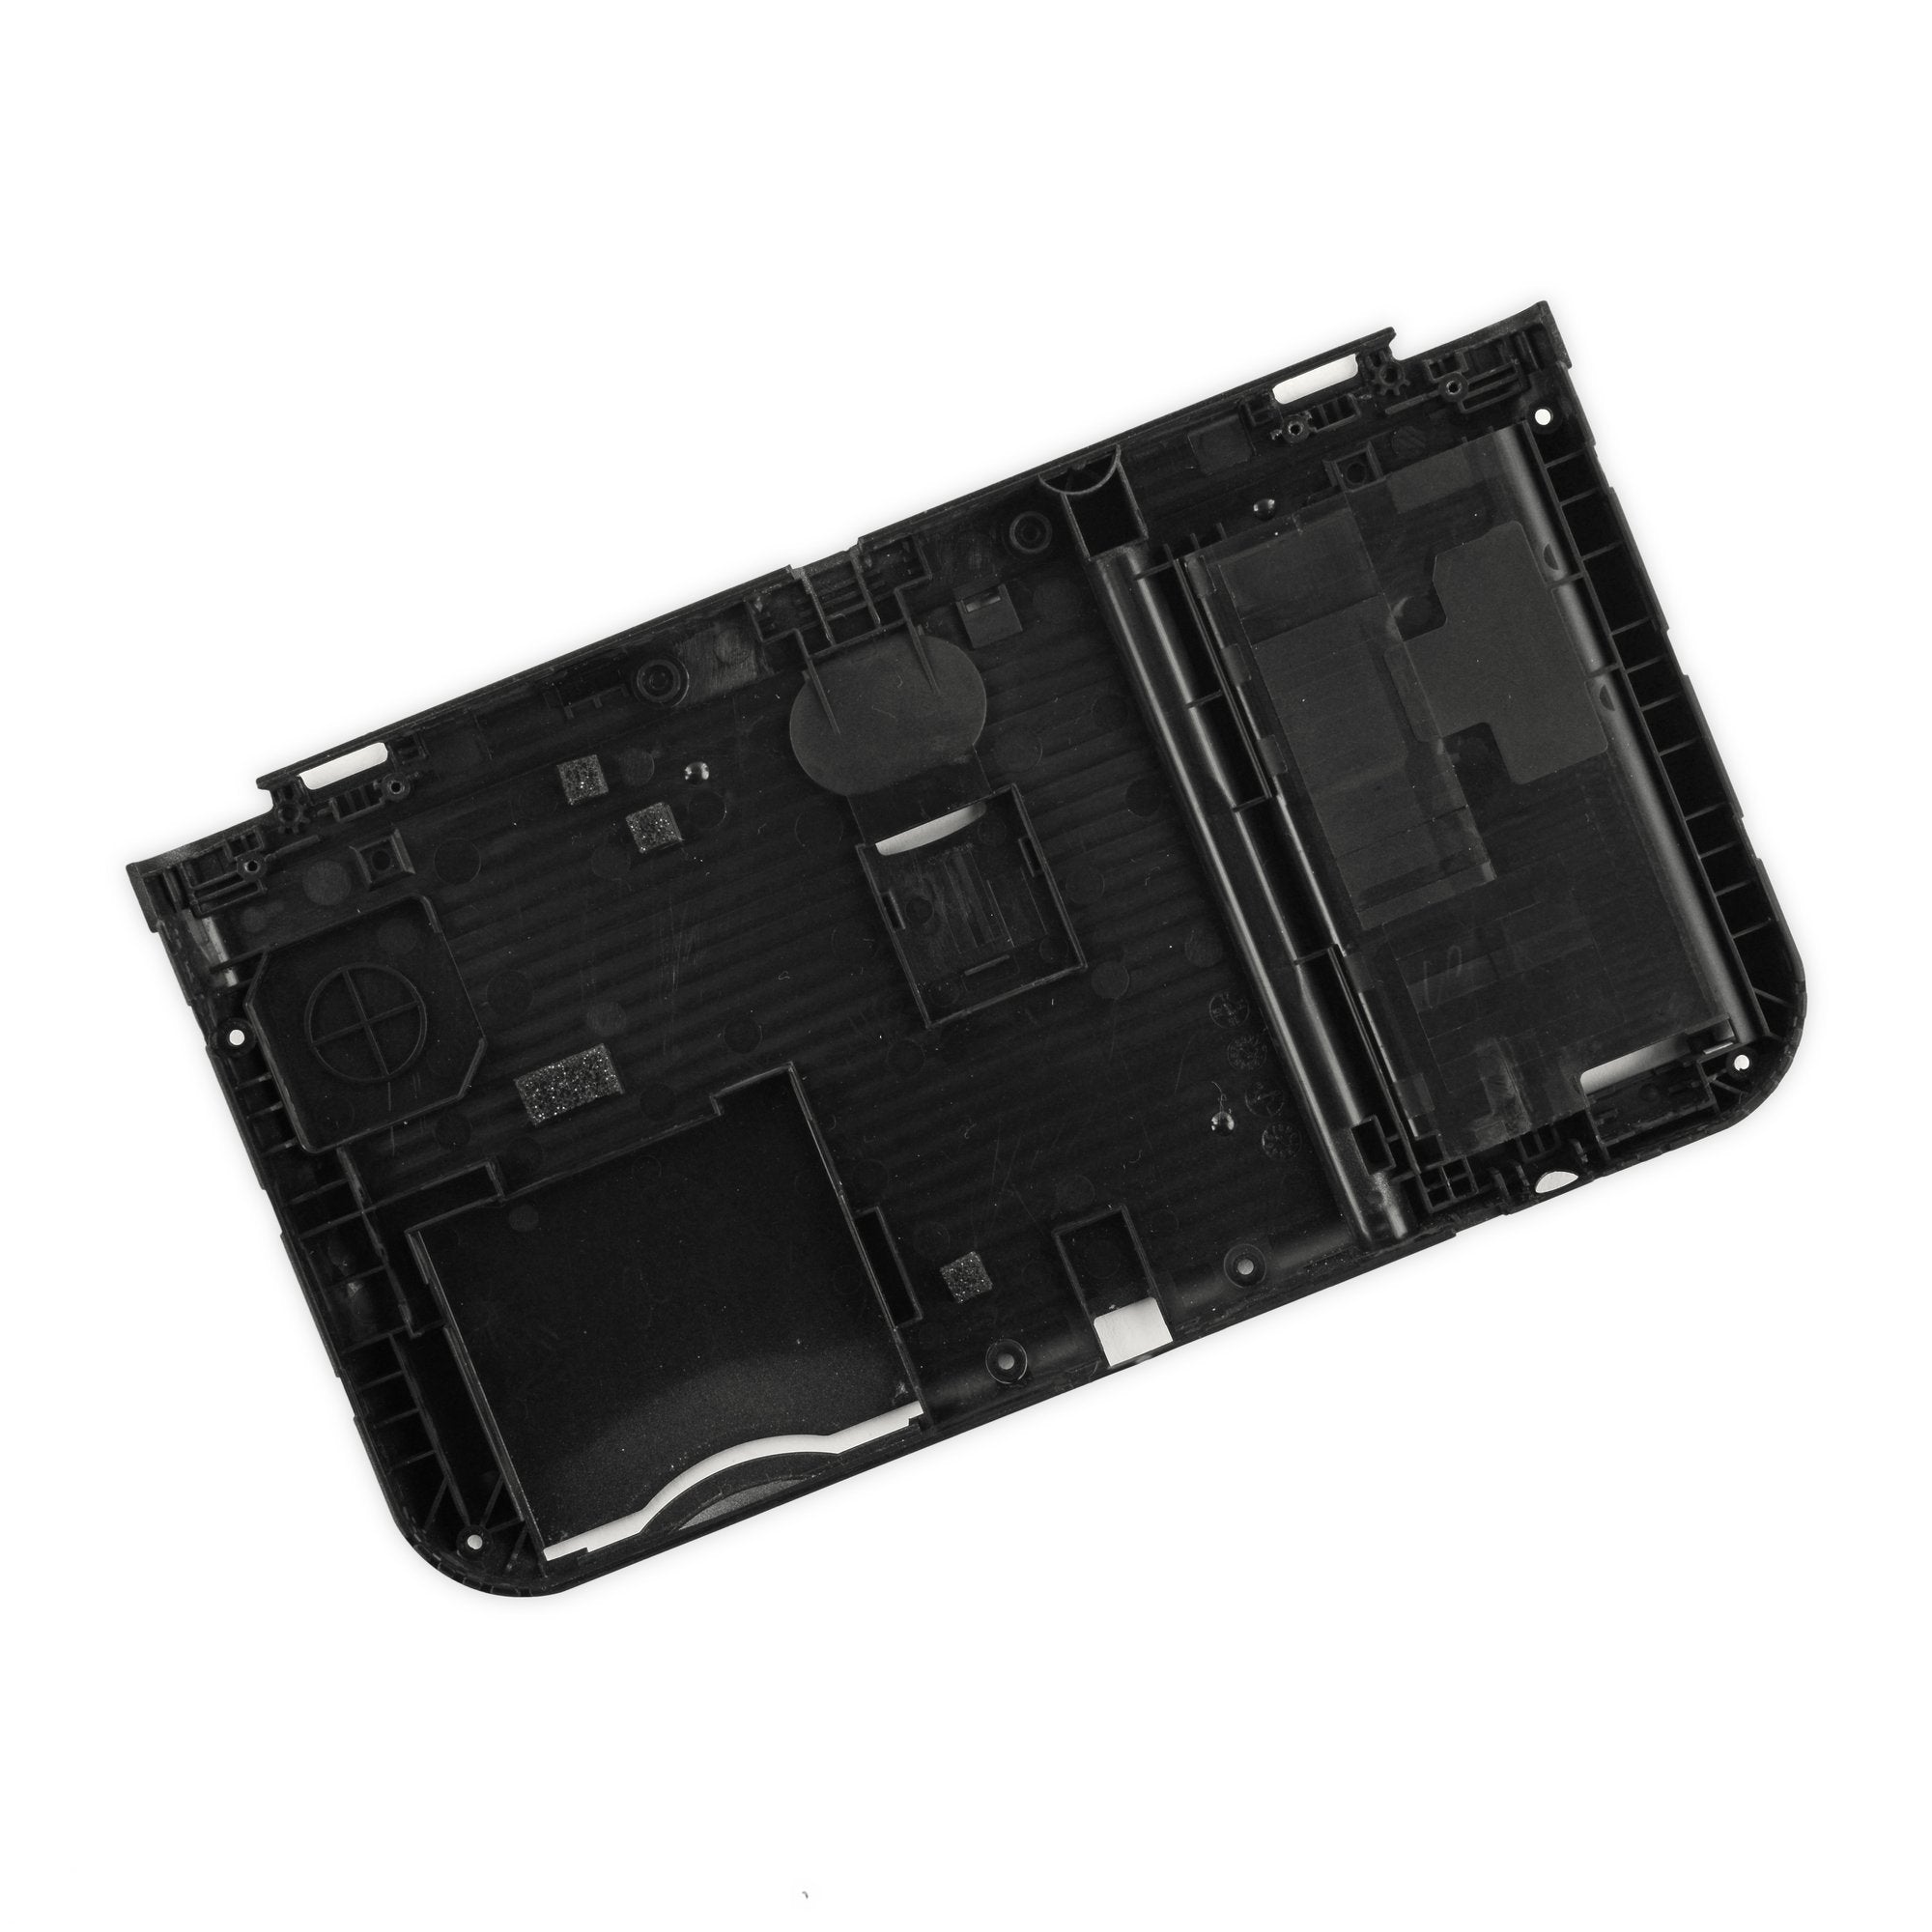 Nintendo 3DS XL (2015) Rear Panel